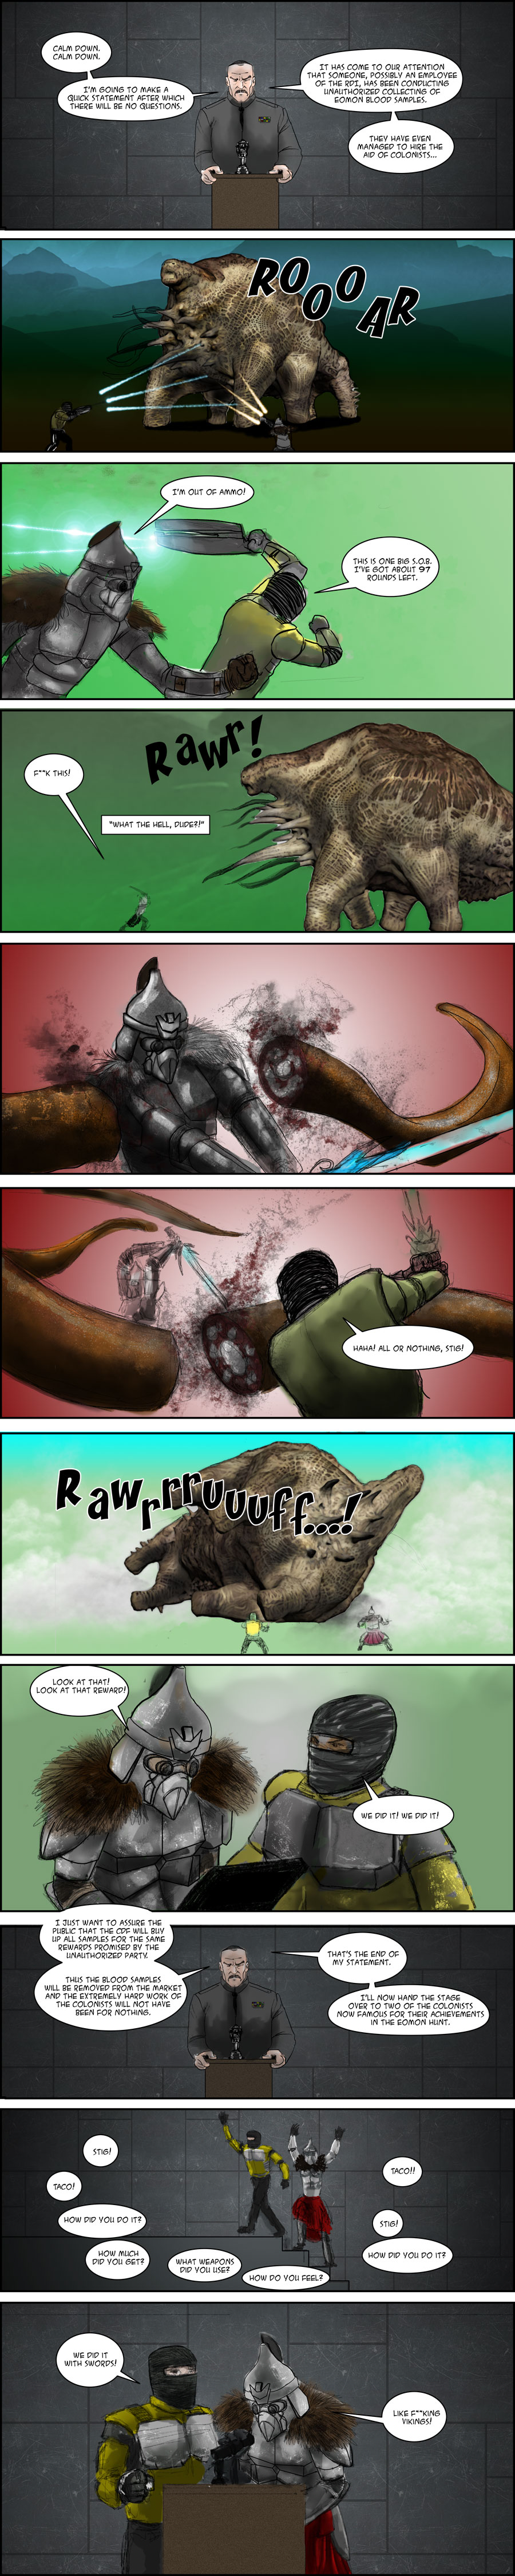 Eomon Migration 2014 storyline comic part 02 - Blood Trail.jpg